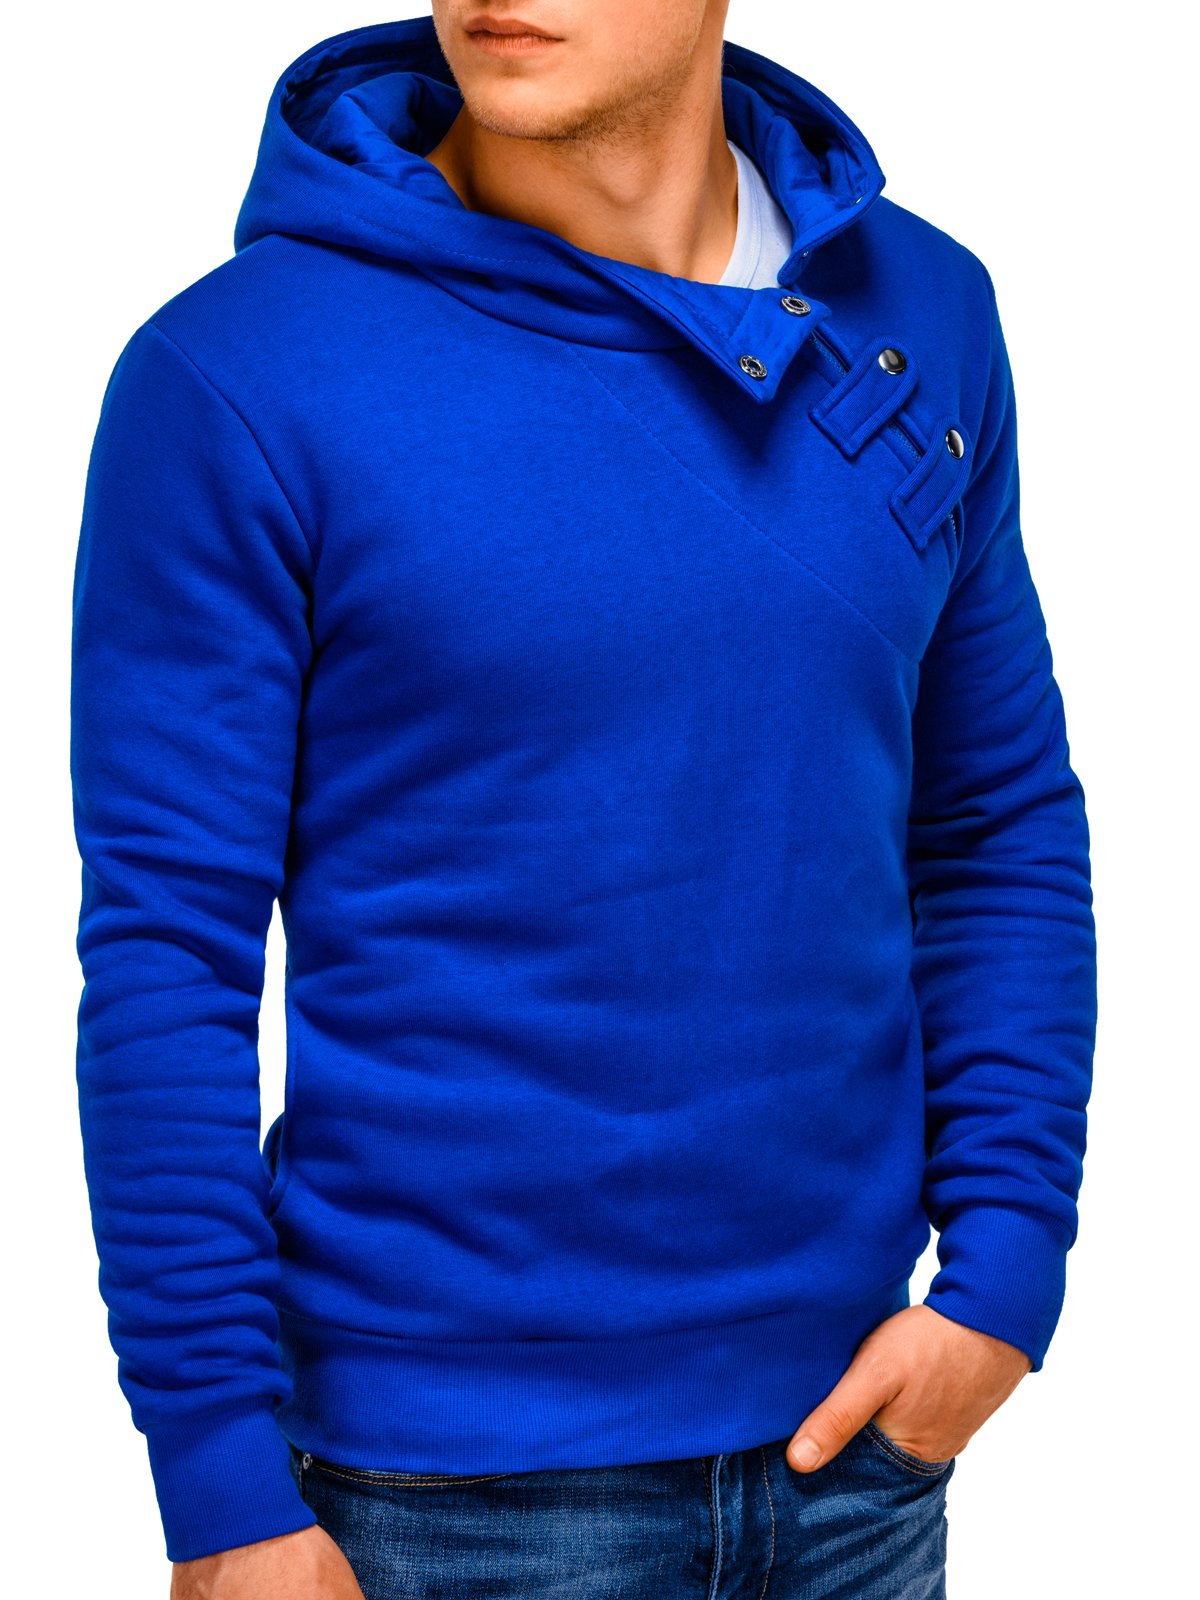 Men's hoodie PACO - blue | MODONE wholesale - Clothing For Men